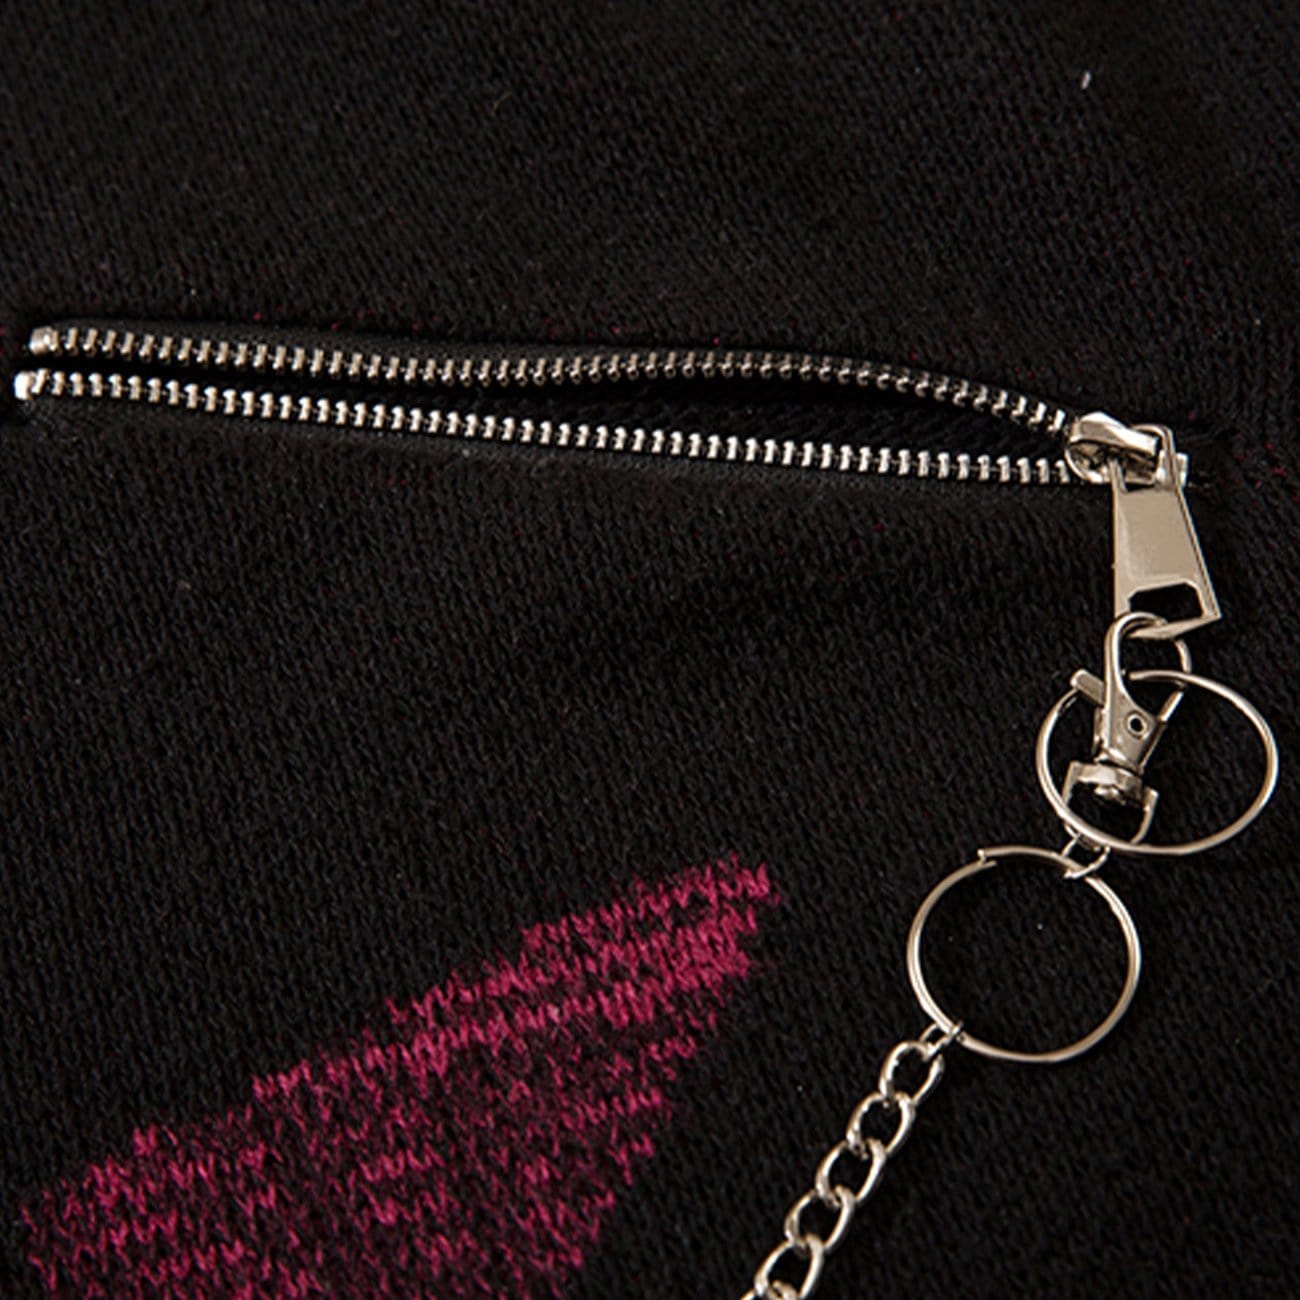 WLS Irregular Ripped Skeleton Zipper Chain Knit Sweater